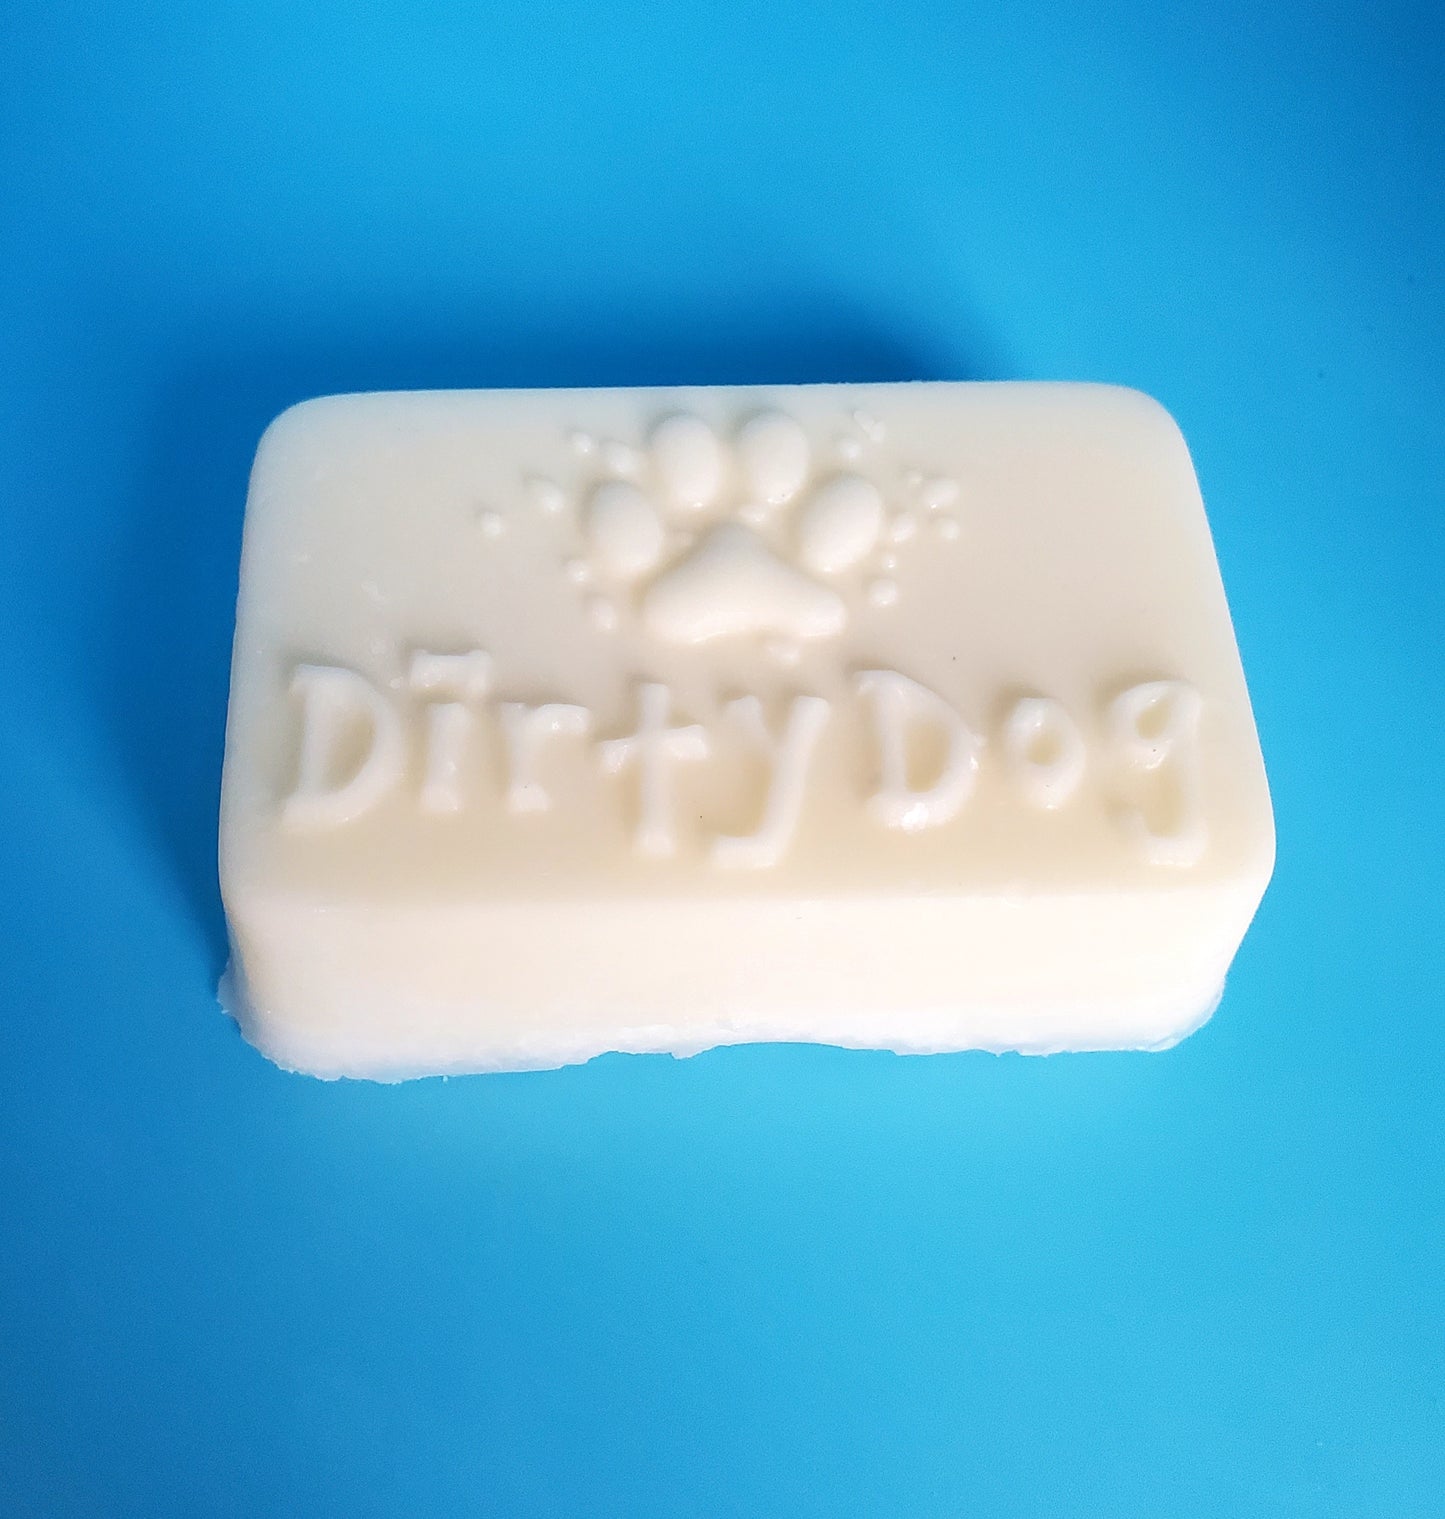 "Dirty dog" all natural dog soap